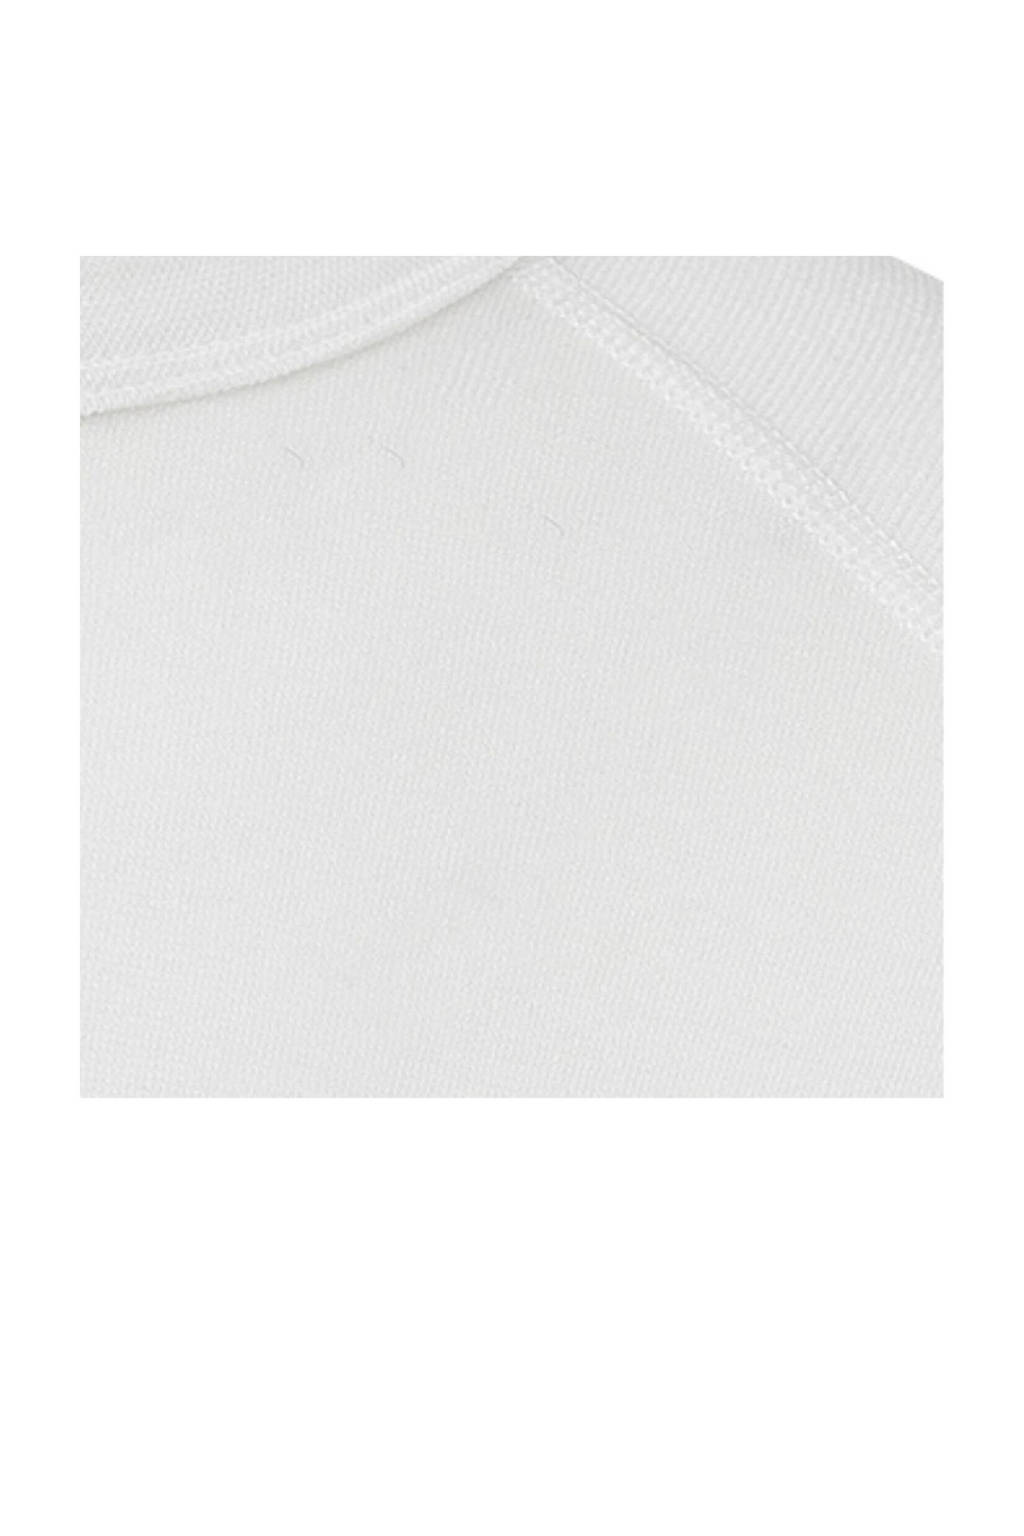 grip elleboog Paar HEMA thermoshirt wit | wehkamp